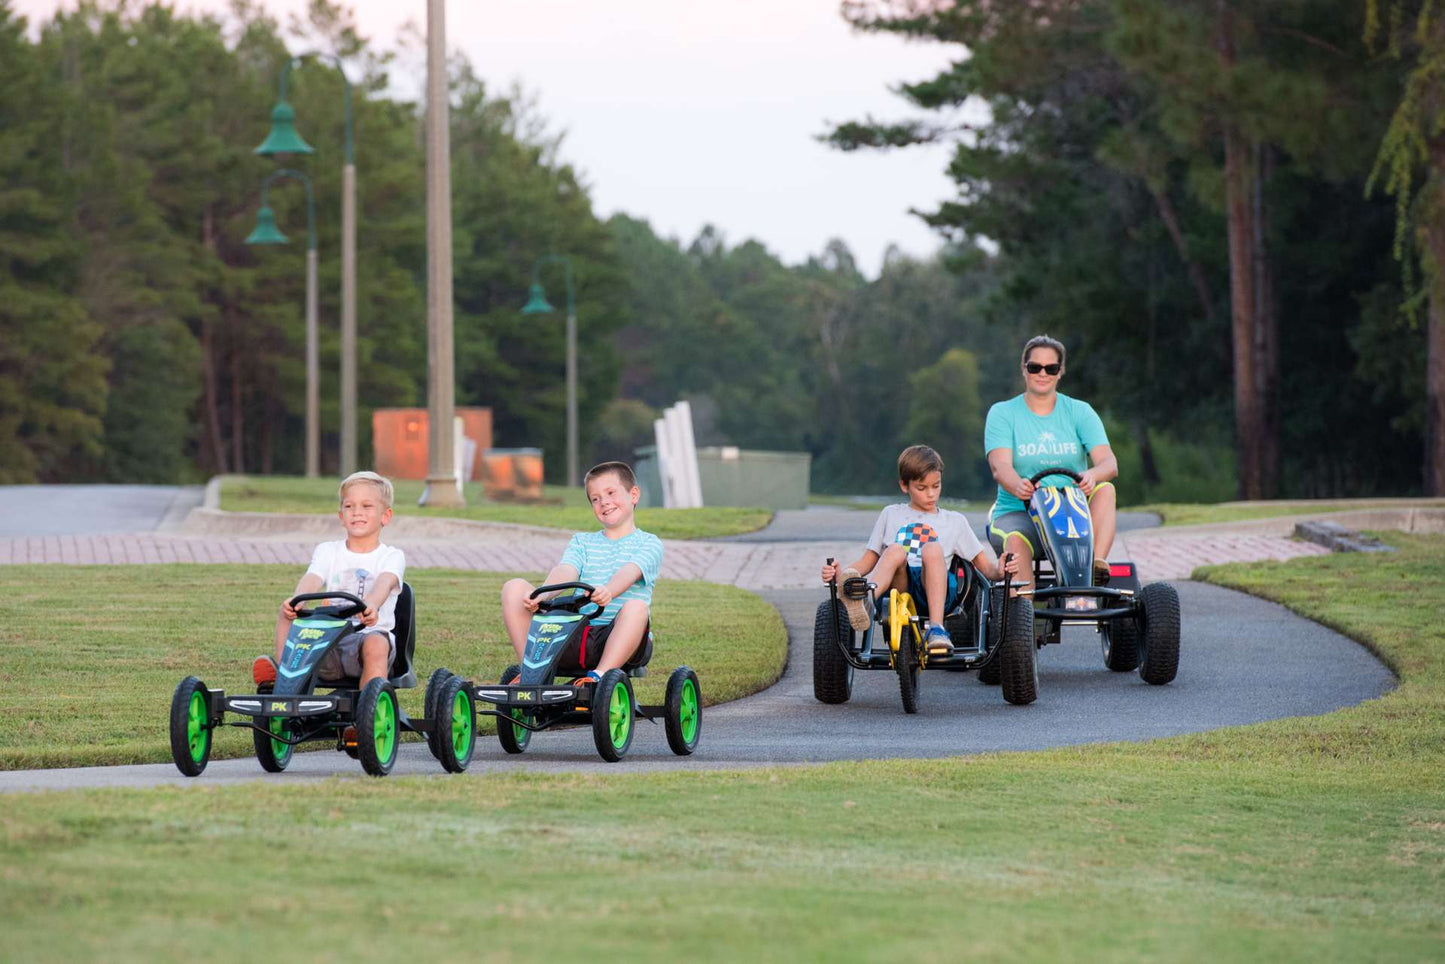 Racing Pedal Karts - Kids